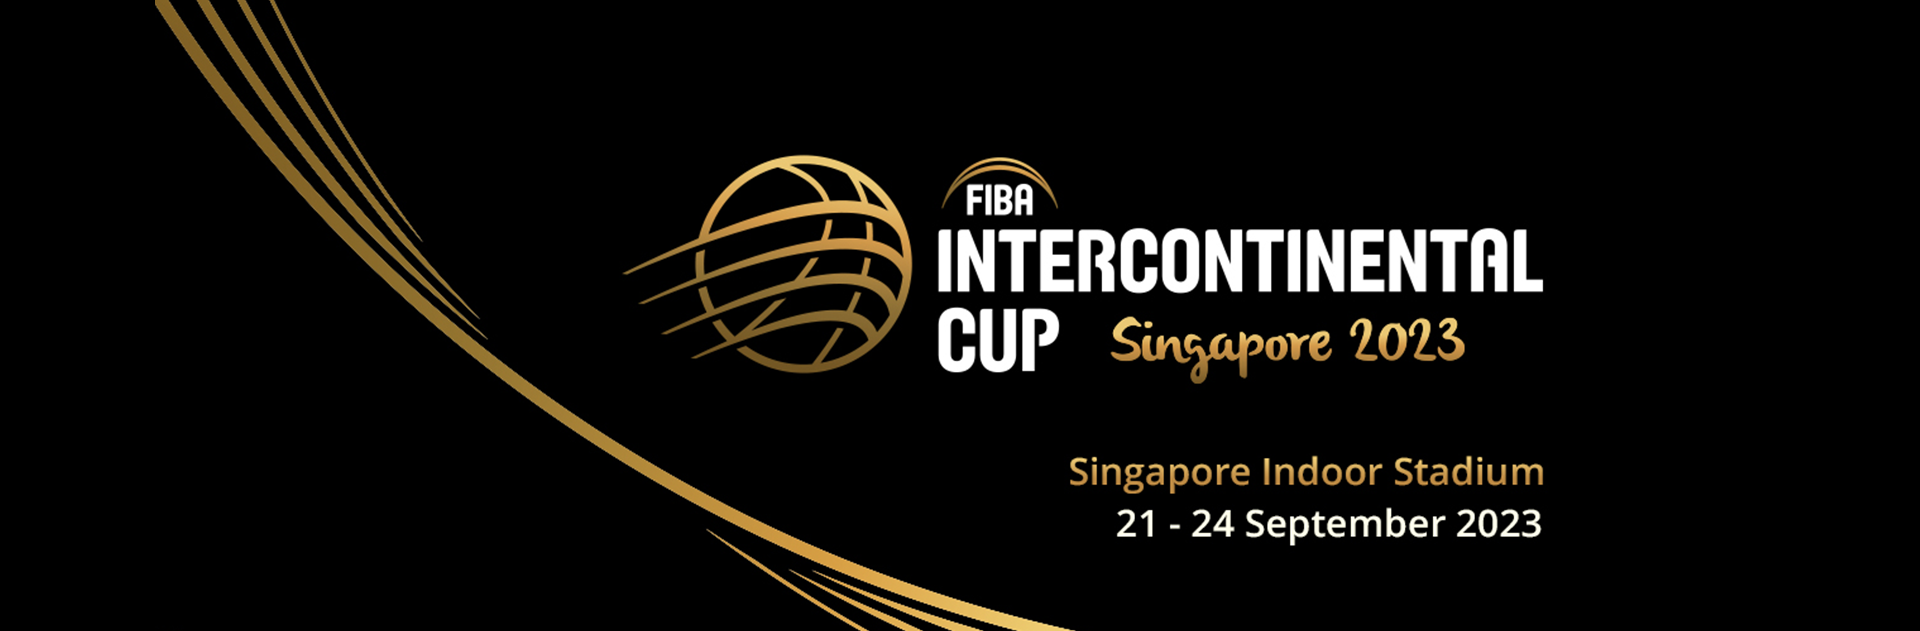 FIBA ICC Singapore 2023